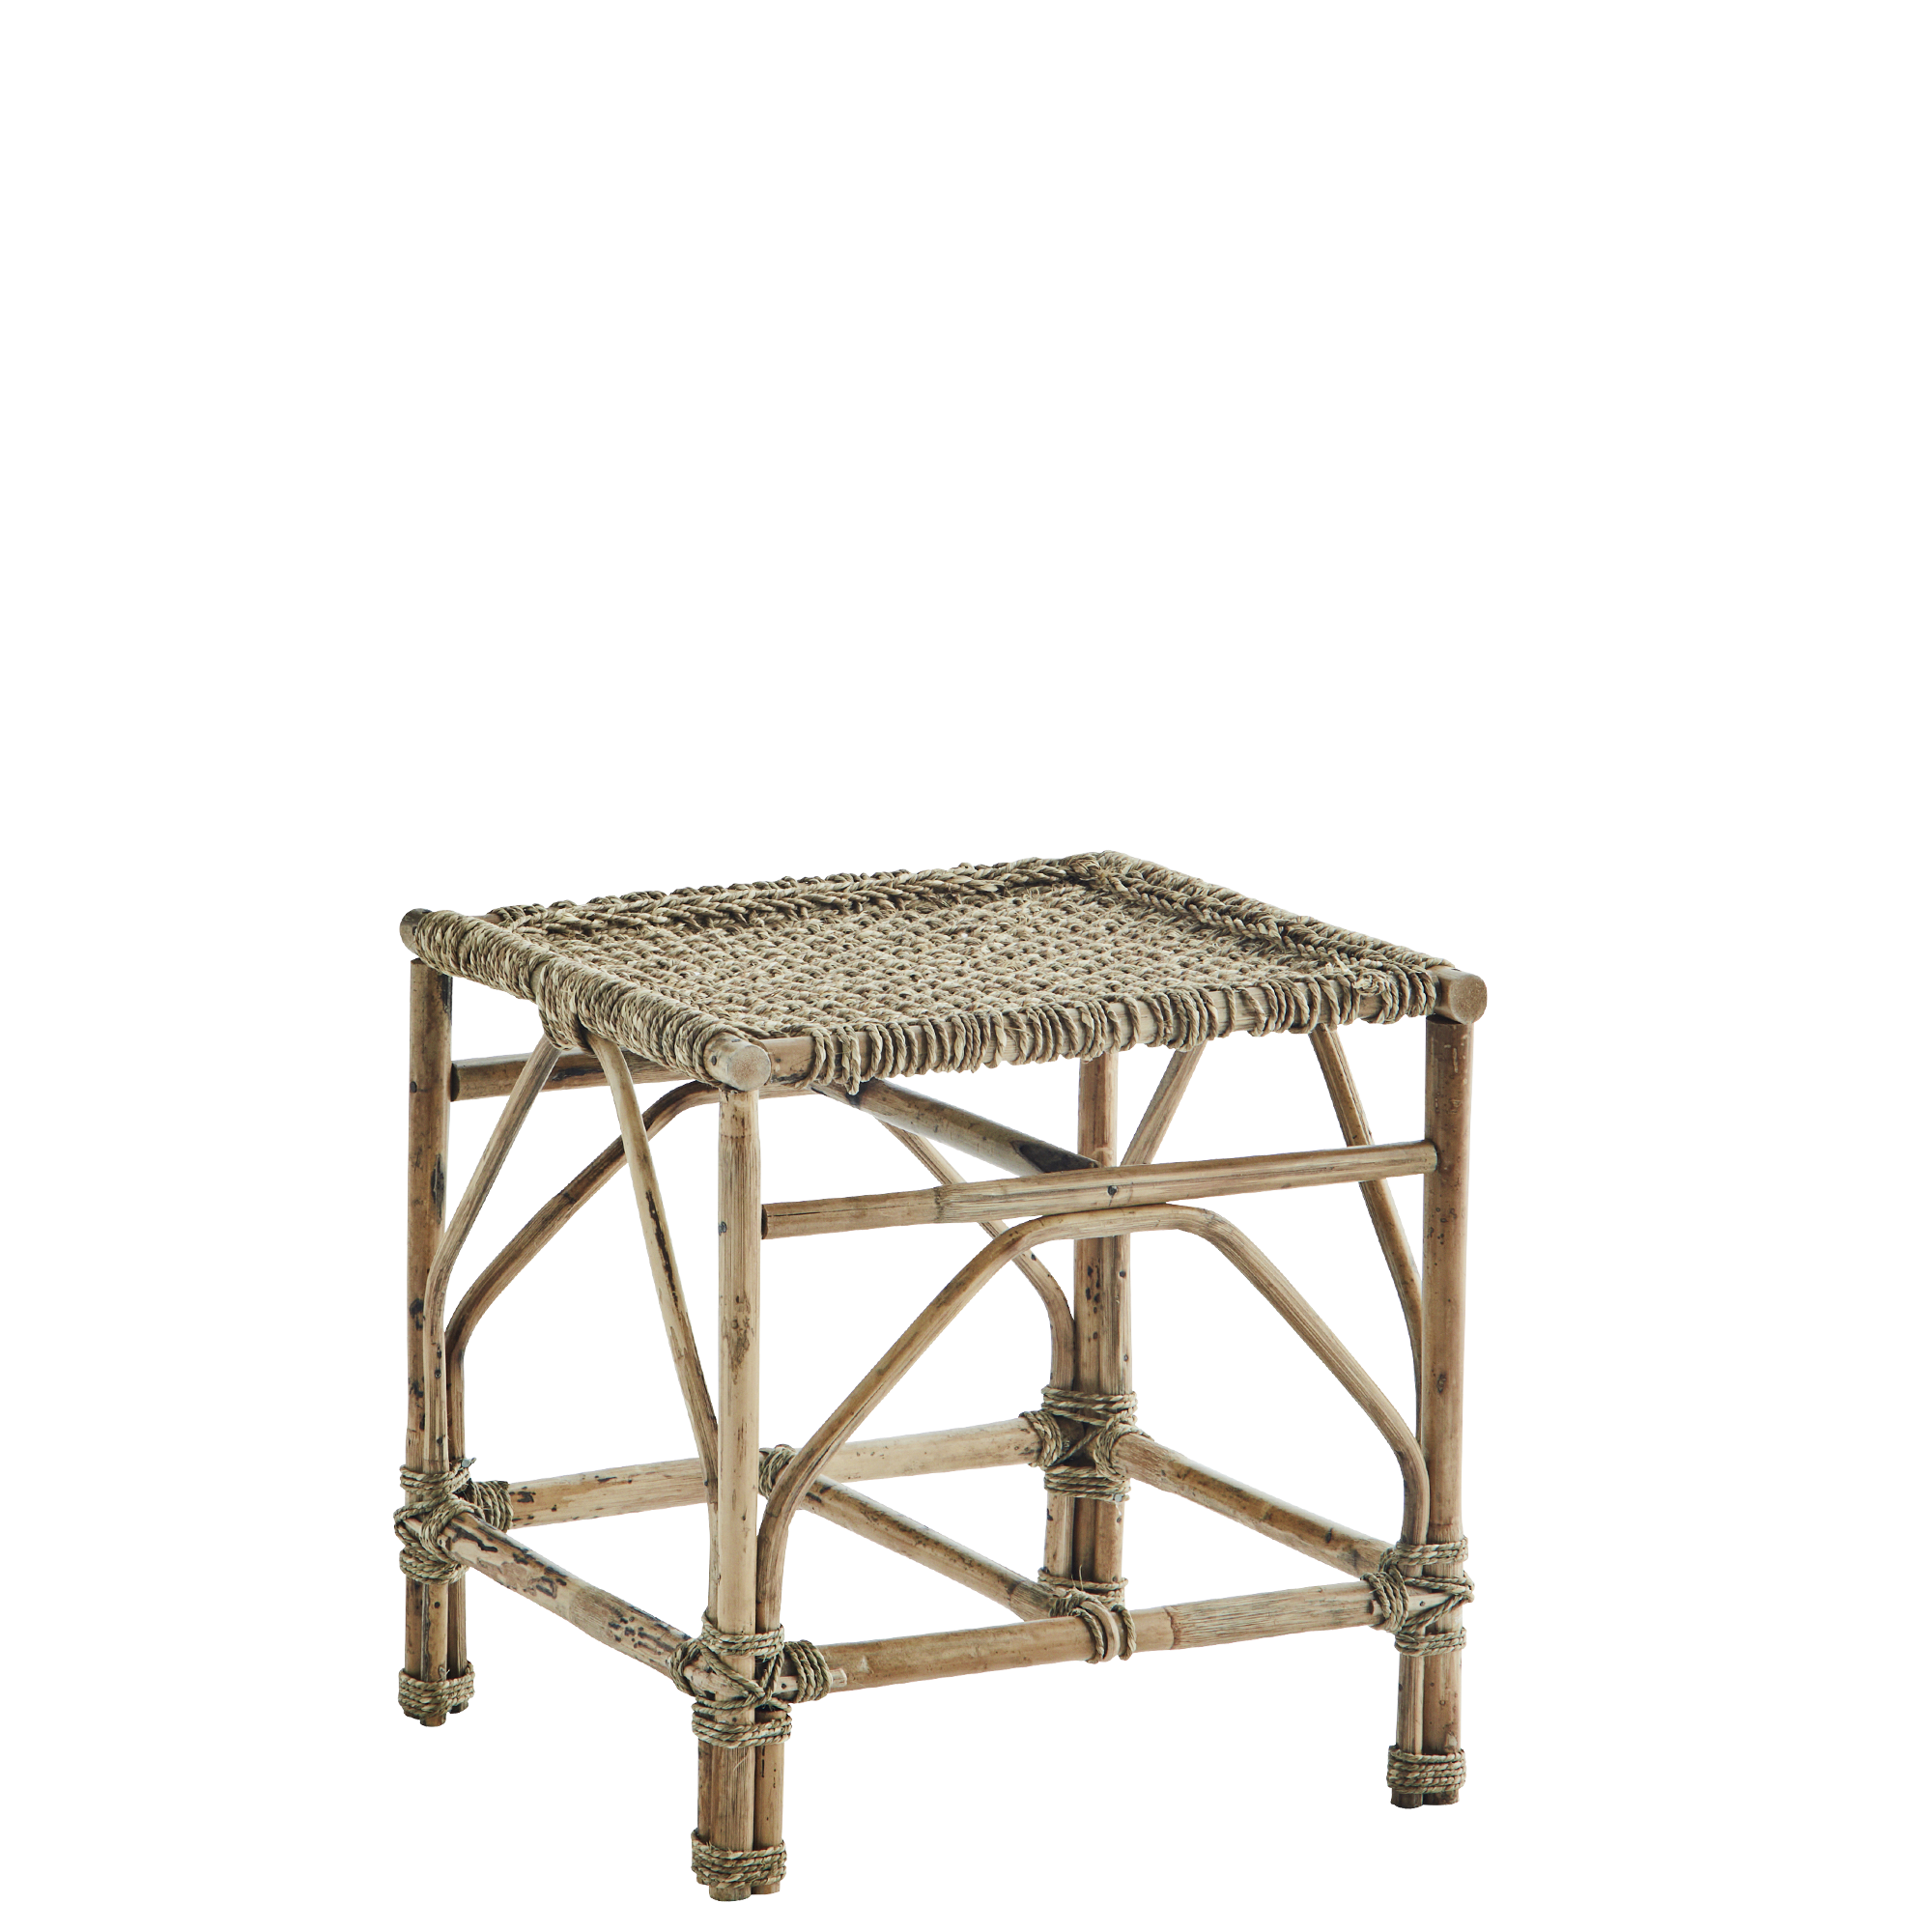 Bamboo stool w/ weaving